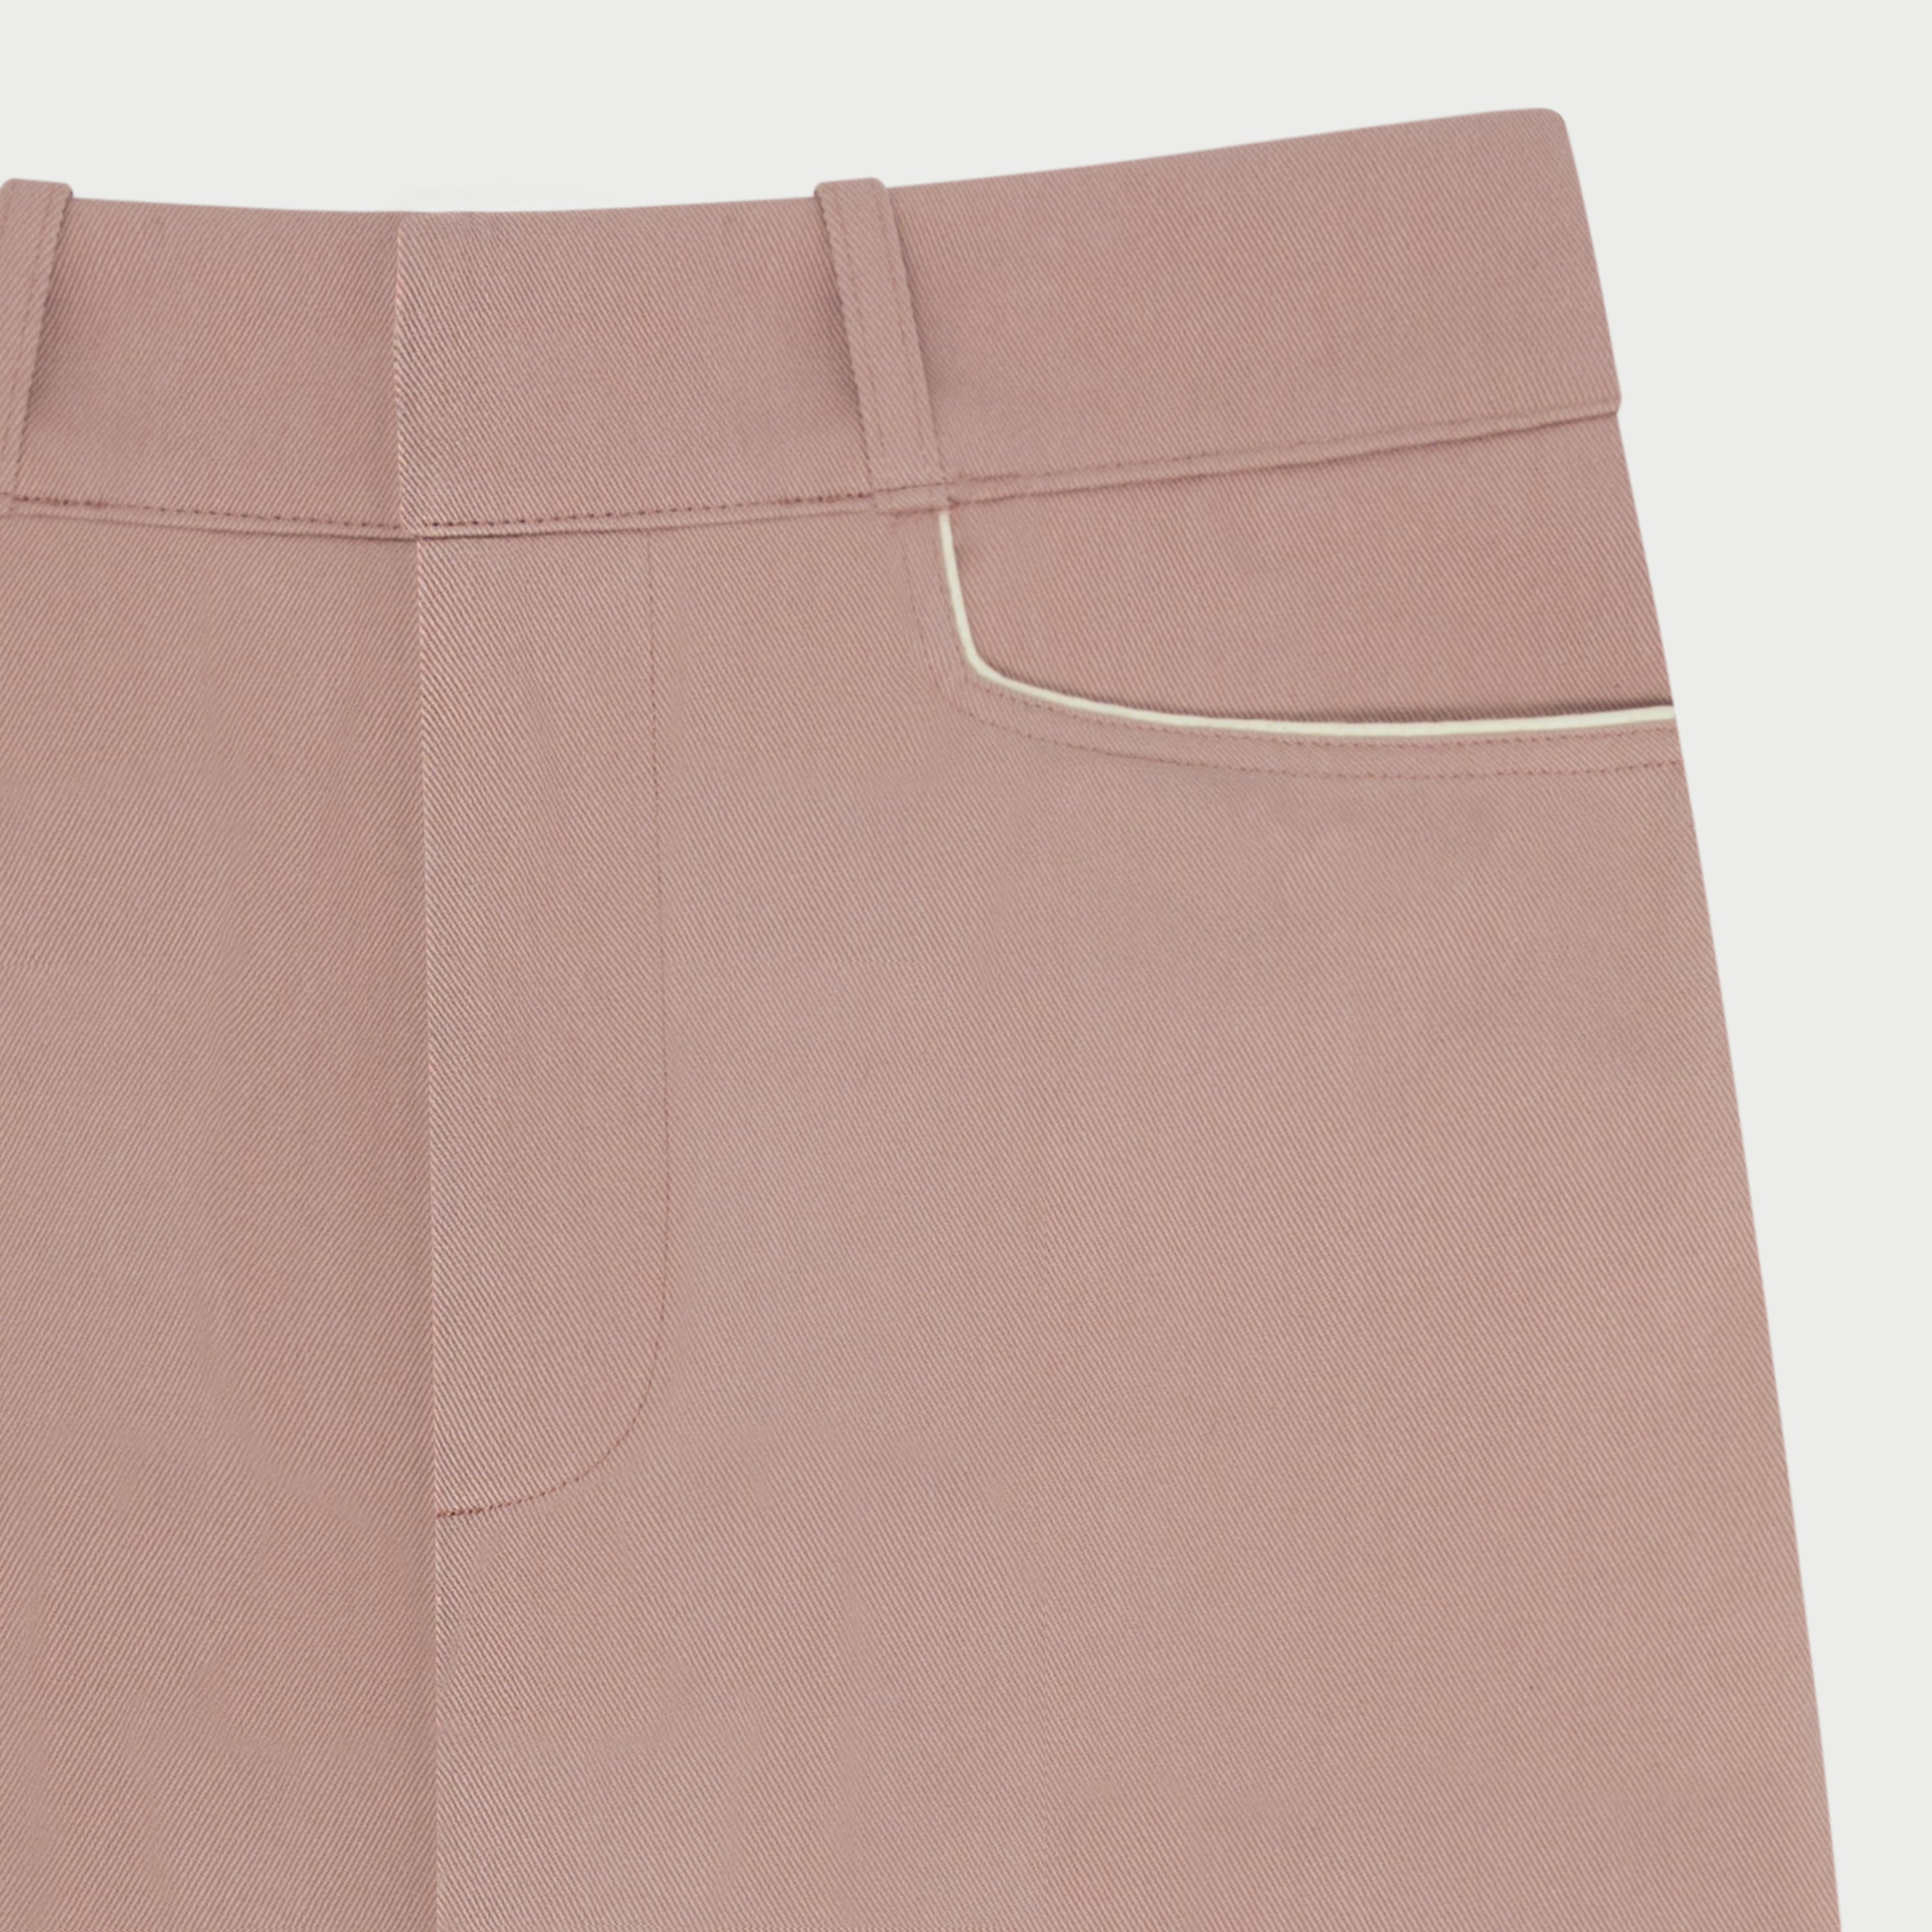 Western Chino Pants (Dusty Pink)